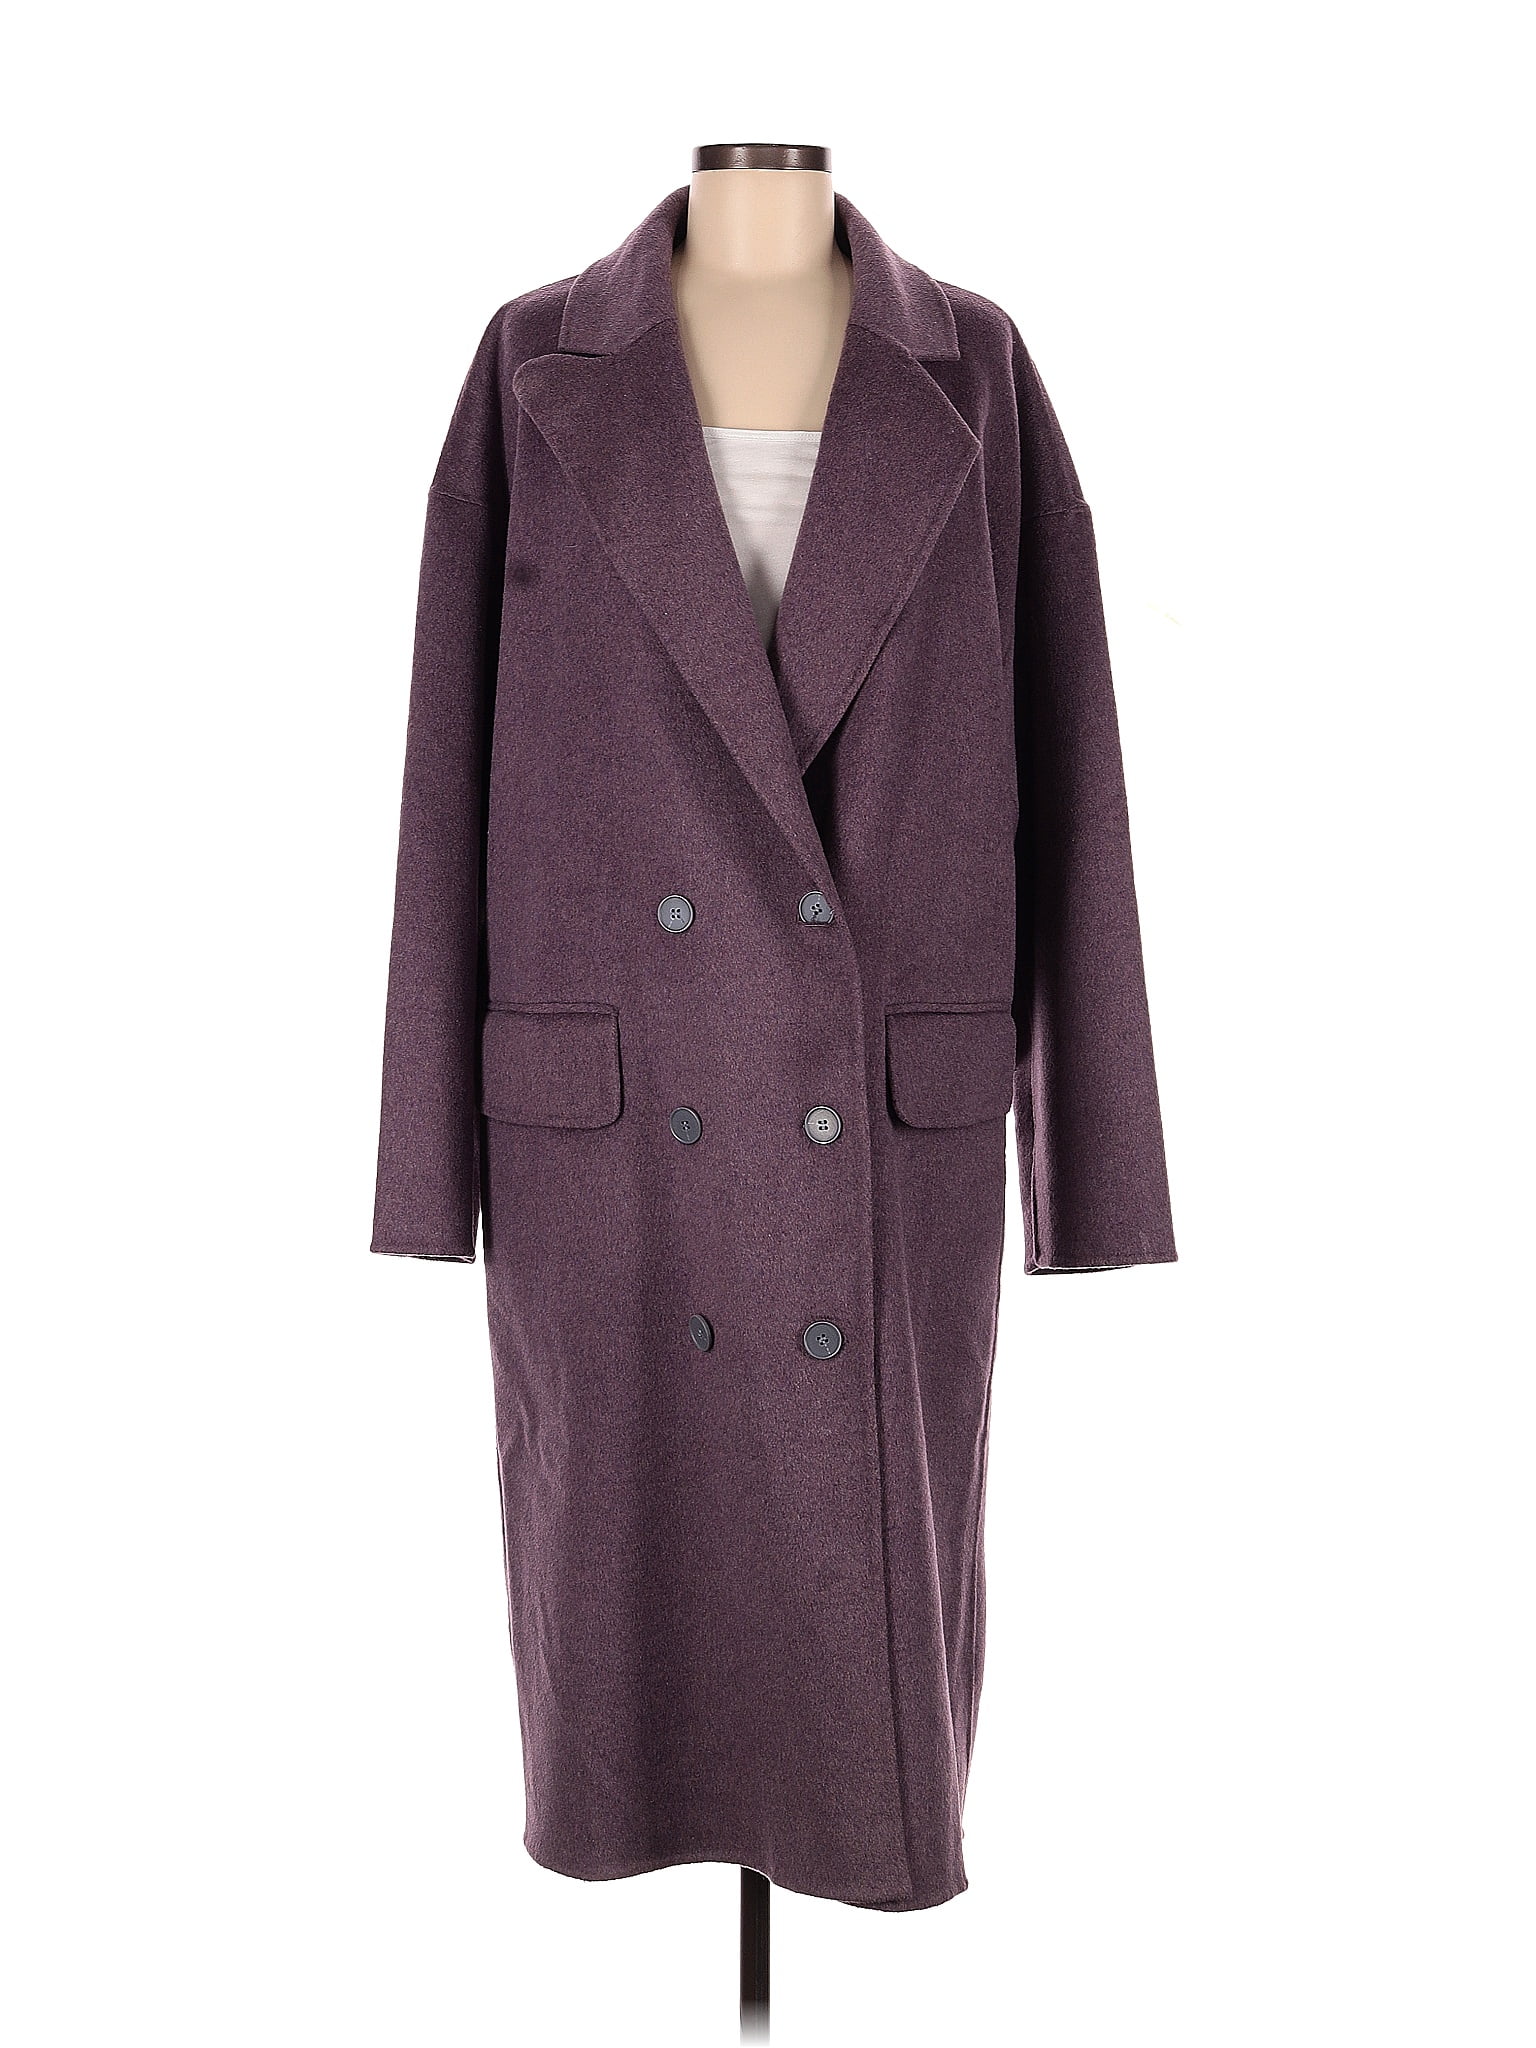 Free People Solid Purple Wool Coat Size M - 63% off | ThredUp